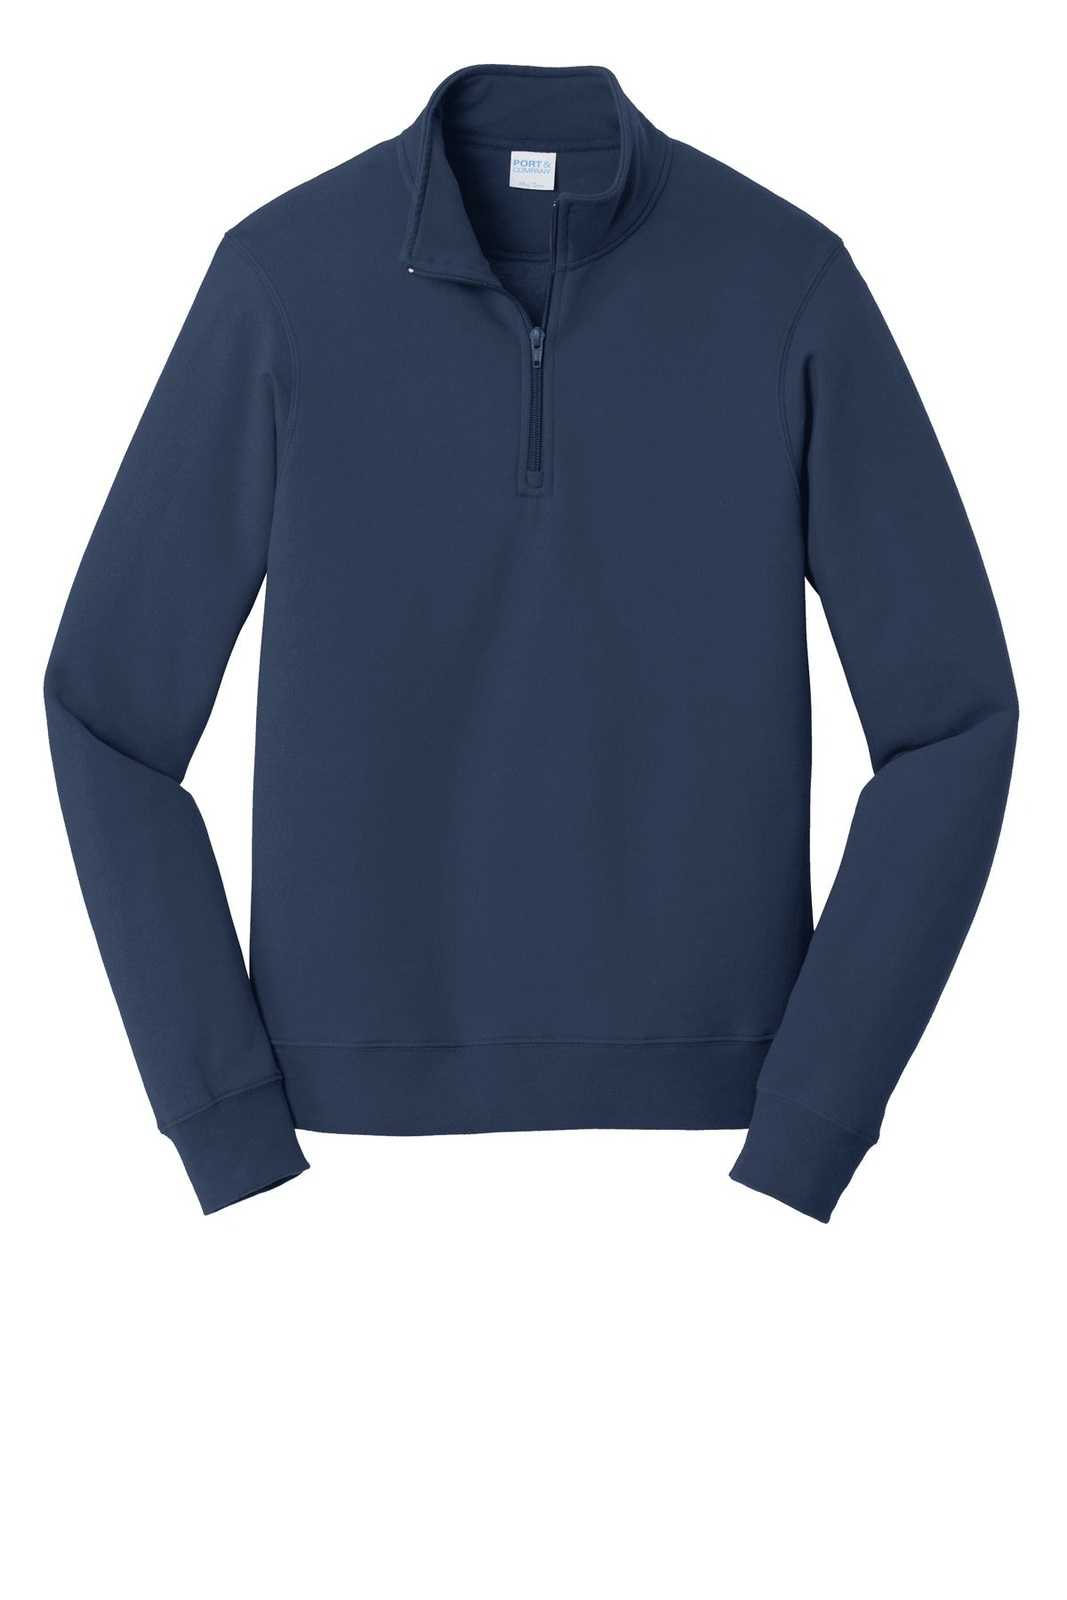 Port & Company PC850Q Fan Favorite Fleece 1/4-Zip Pullover Sweatshirt - Team Navy - HIT a Double - 1